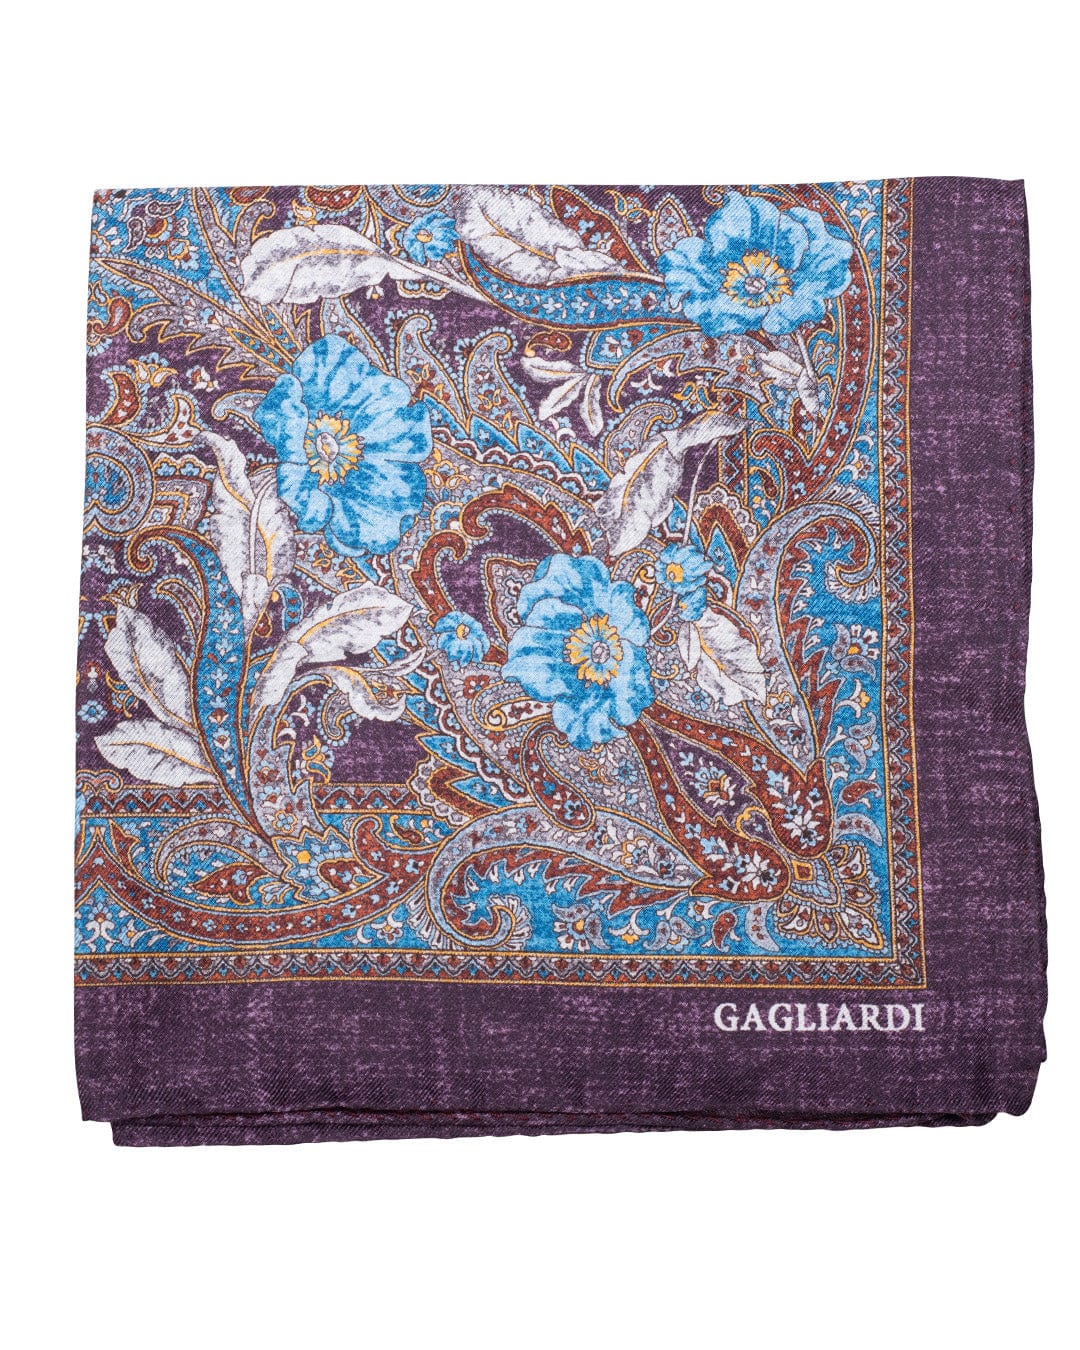 Gagliardi Pocket Squares ONE Gagliardi Purple Rich Floral Print Italian Silk Pocket Square